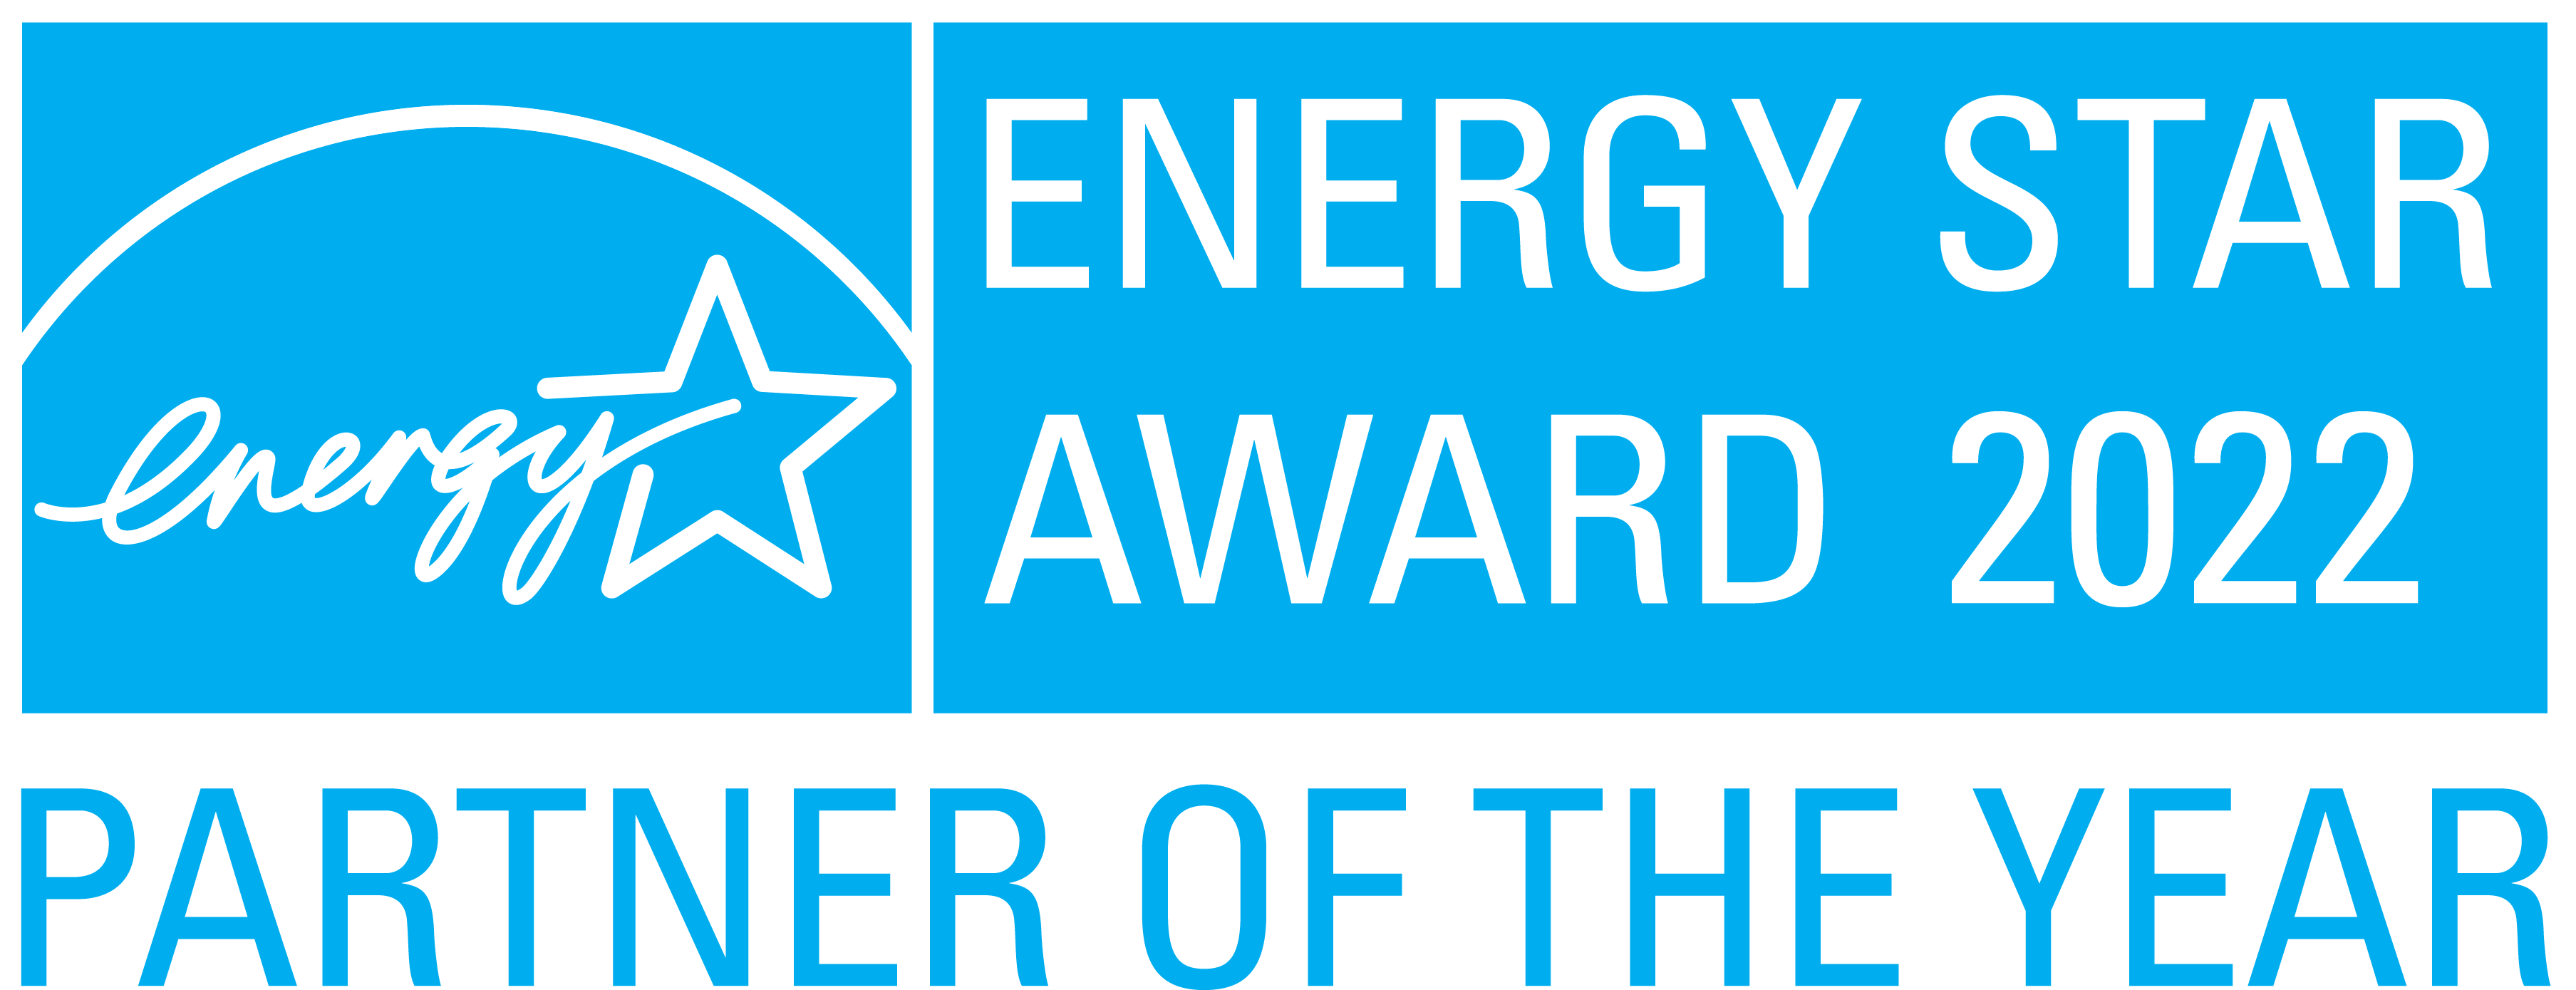 ENERGY STAR 2022 Partner of the Year logo